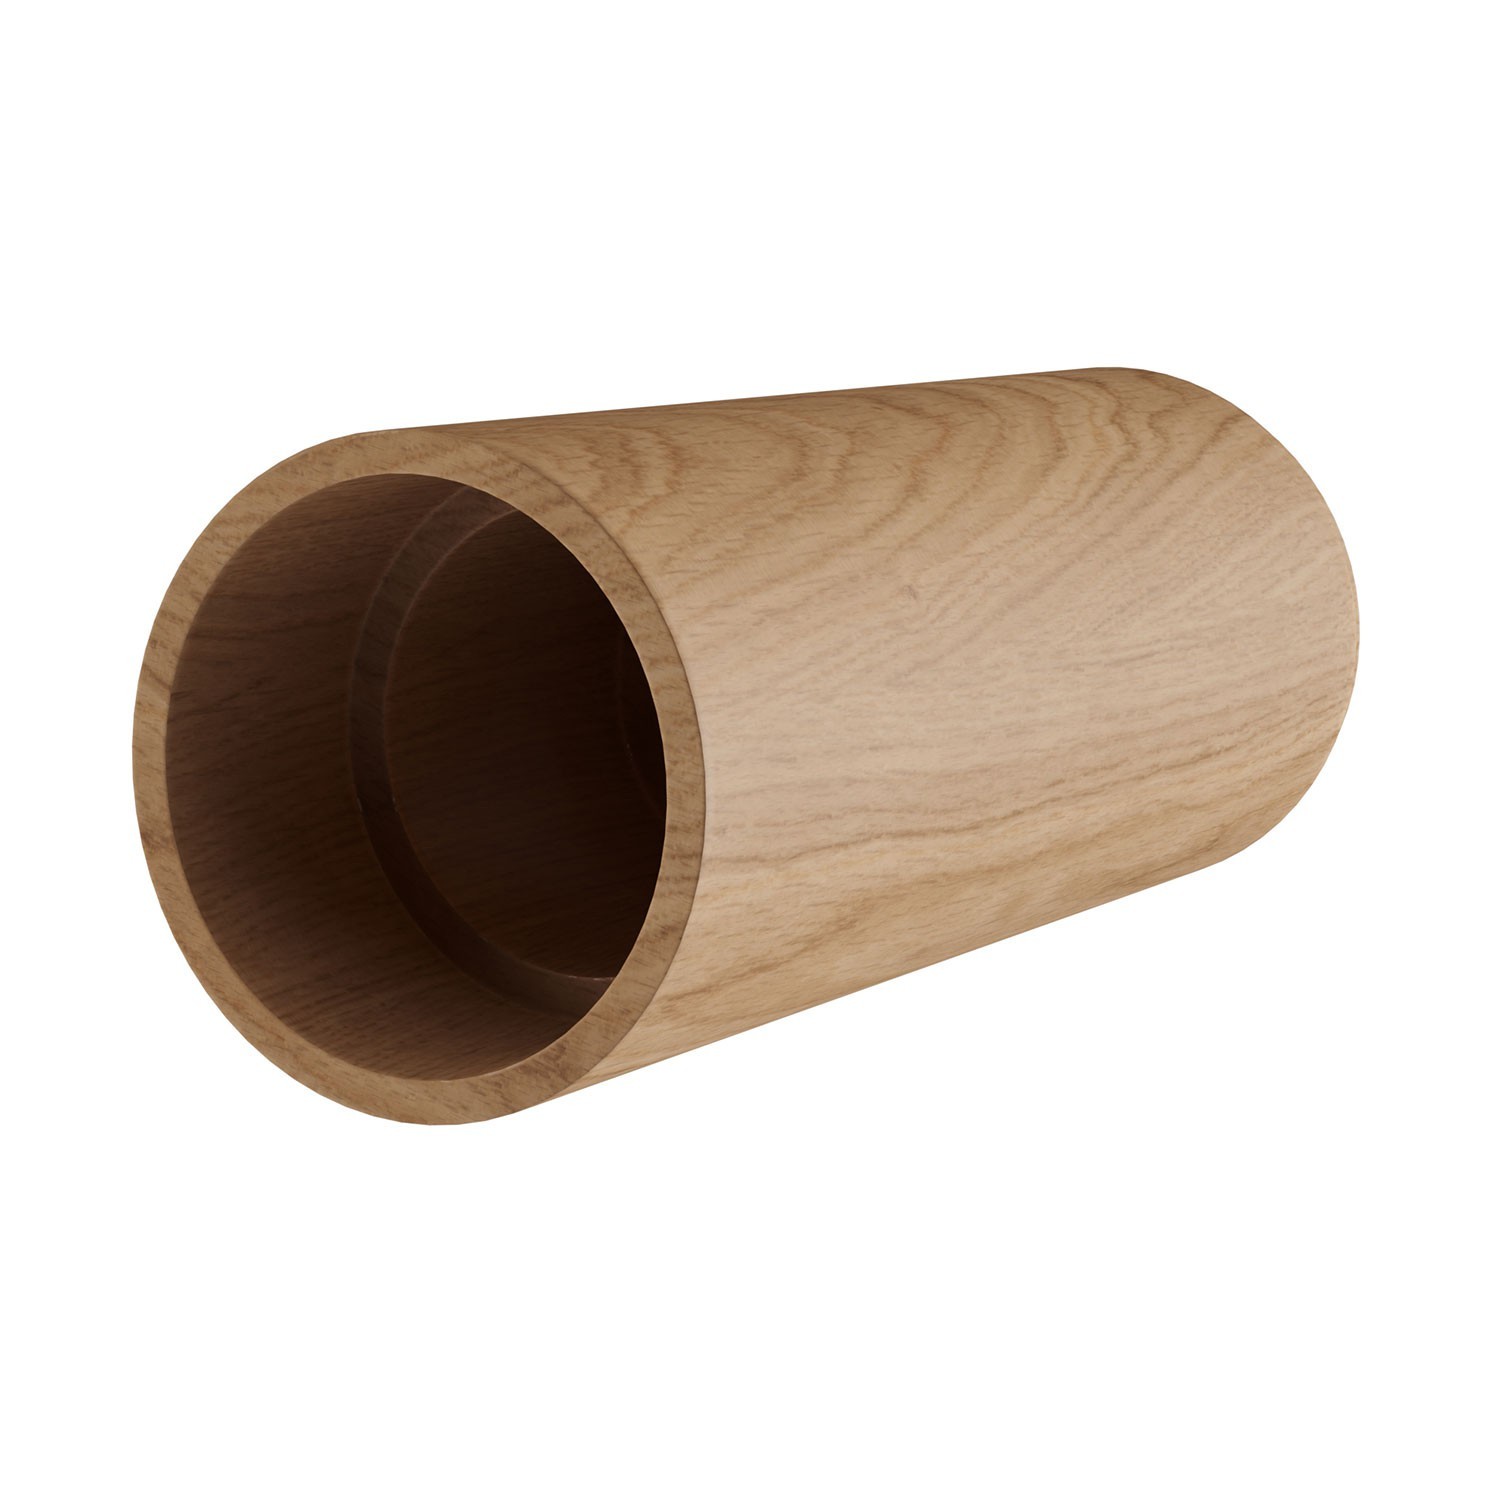 Tub-E14, houten buis voor spot met E14 fitting